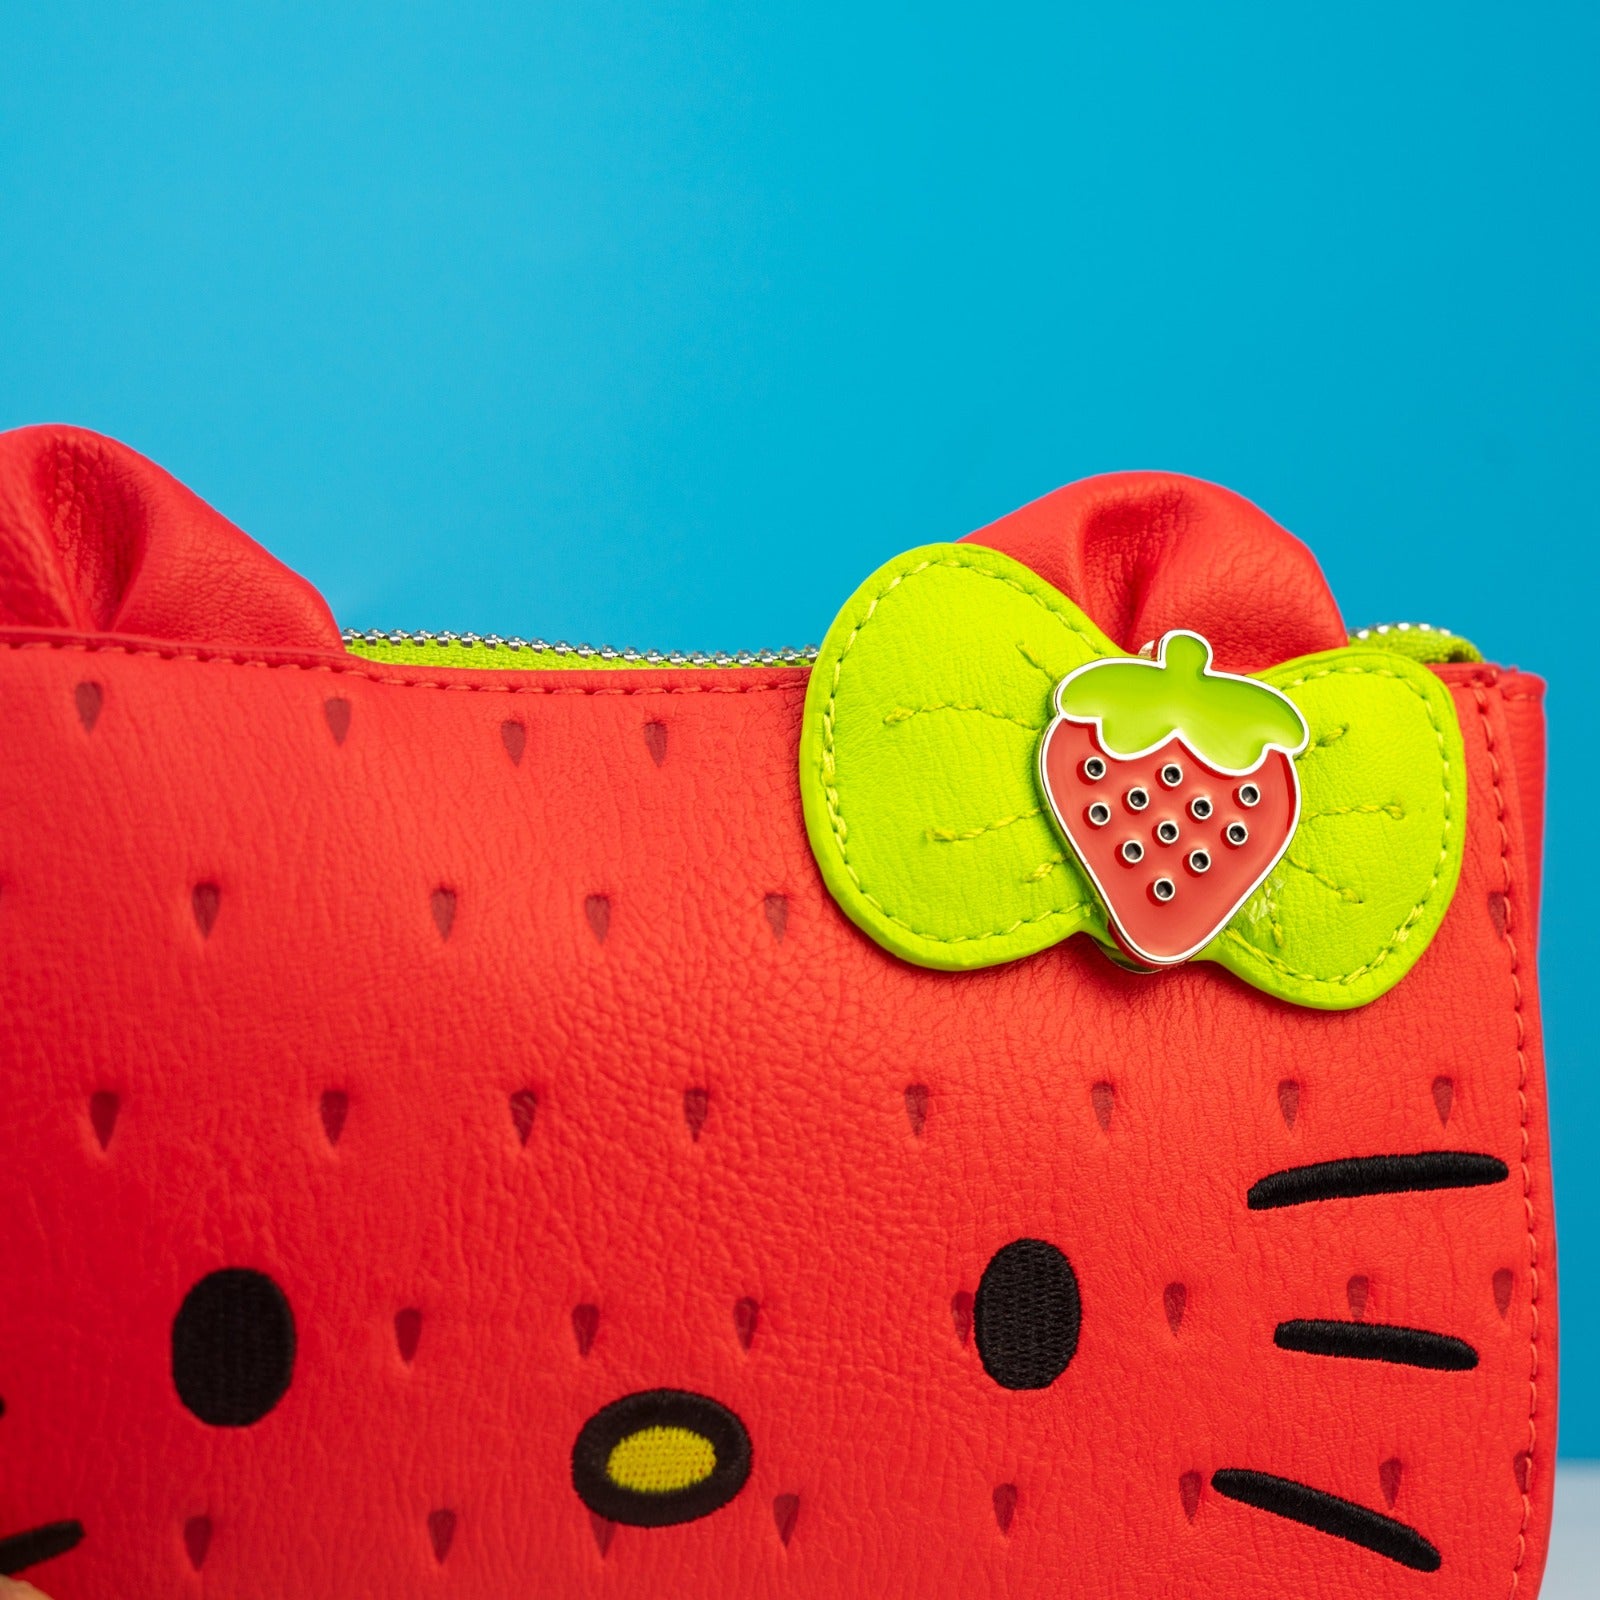 Loungefly x Hello Kitty Strawberry Waist Bag